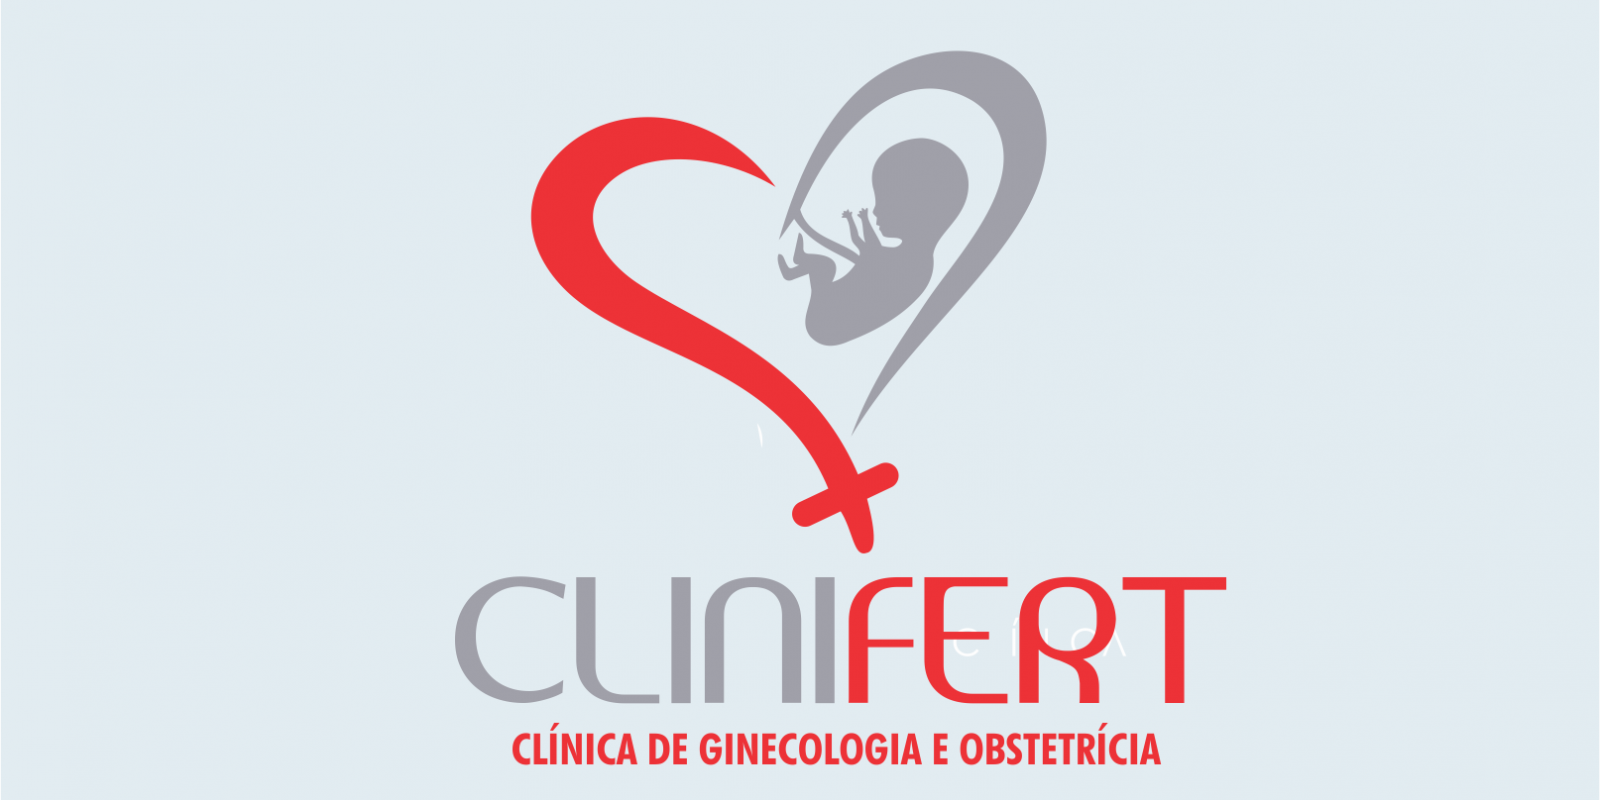 Clinifert - Clínica de Ginecologia e Obstetrícia